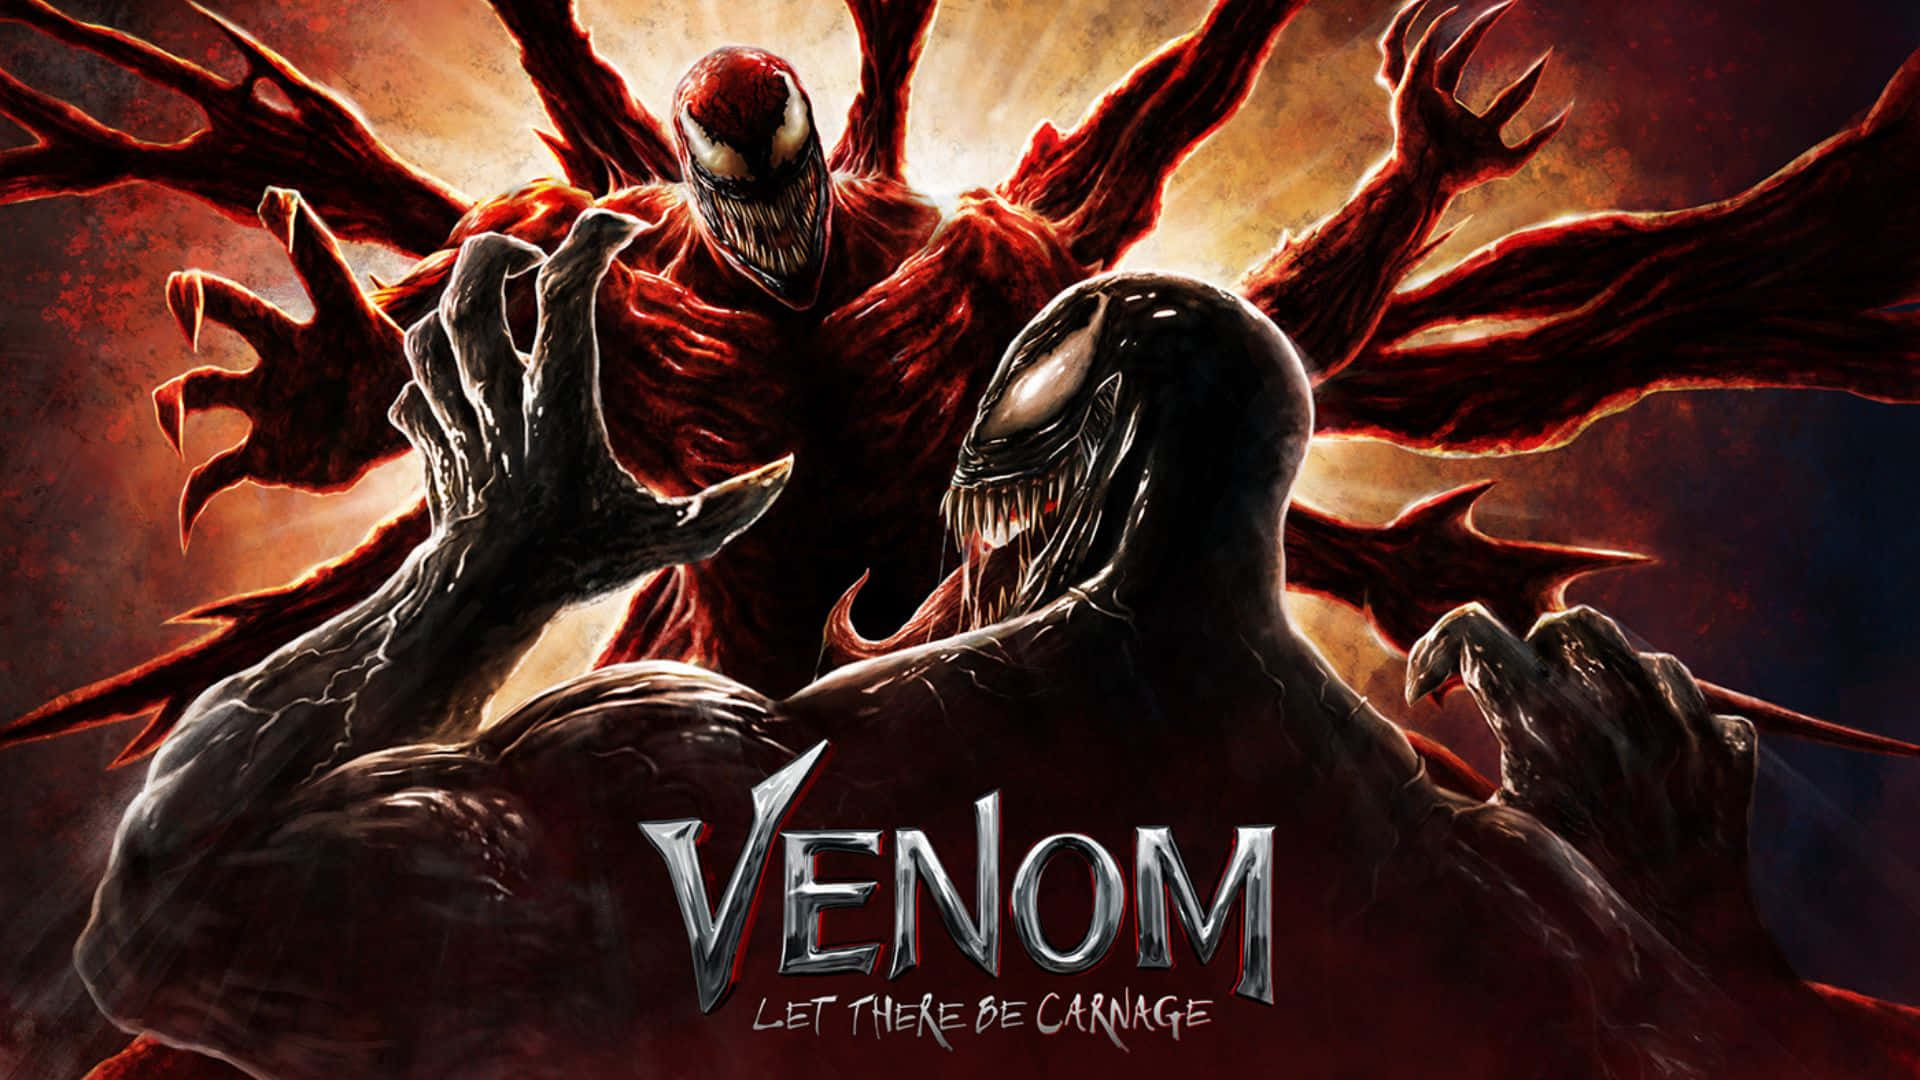 Imagemde Marvel Comic Superstars Venom & Carnage Clash Em Batalha. Papel de Parede